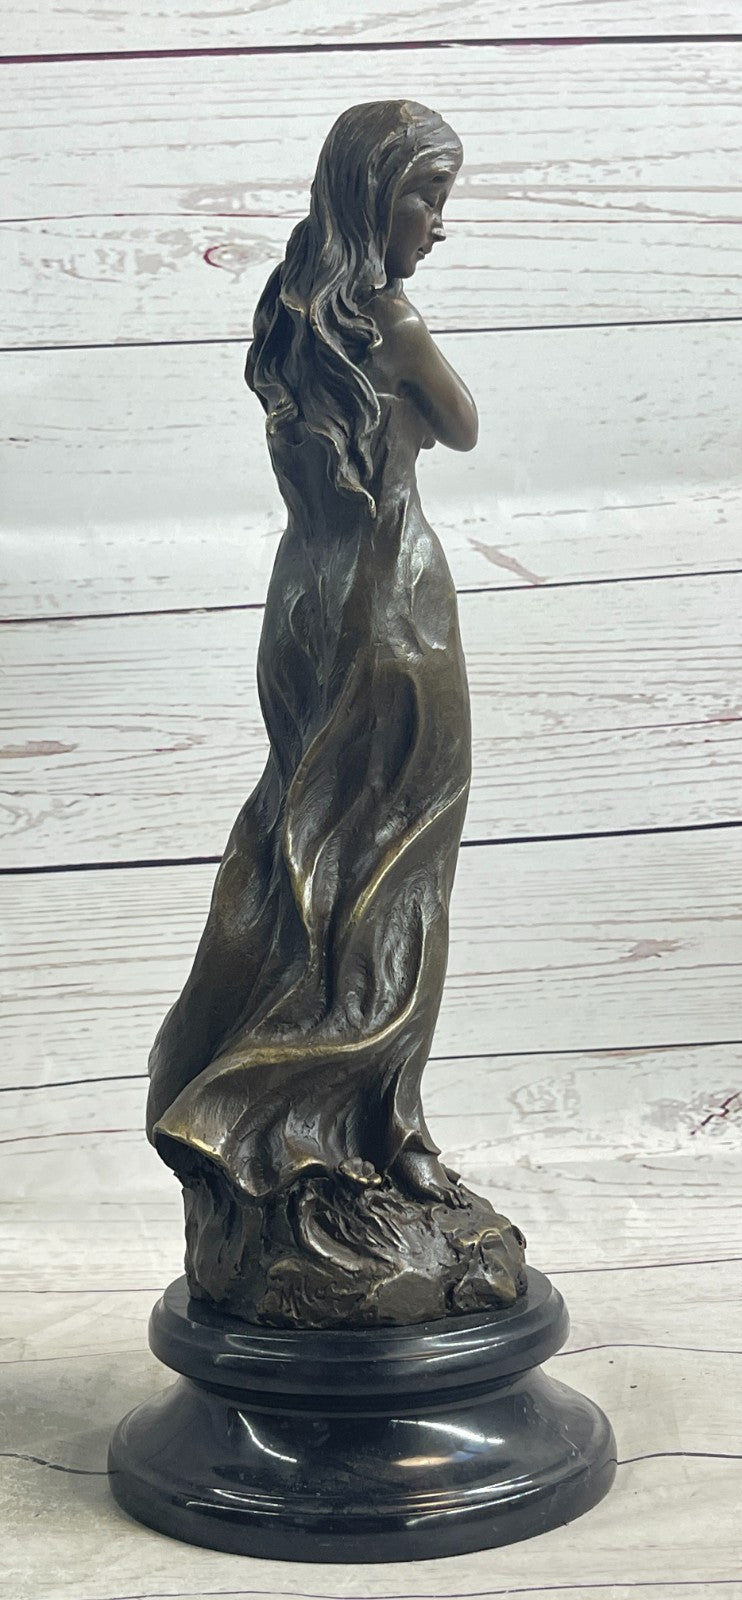 Sensual Female Bronze Sculpture in Art Deco Style | Handcrafted Statue by Milo | Lost Wax Technique